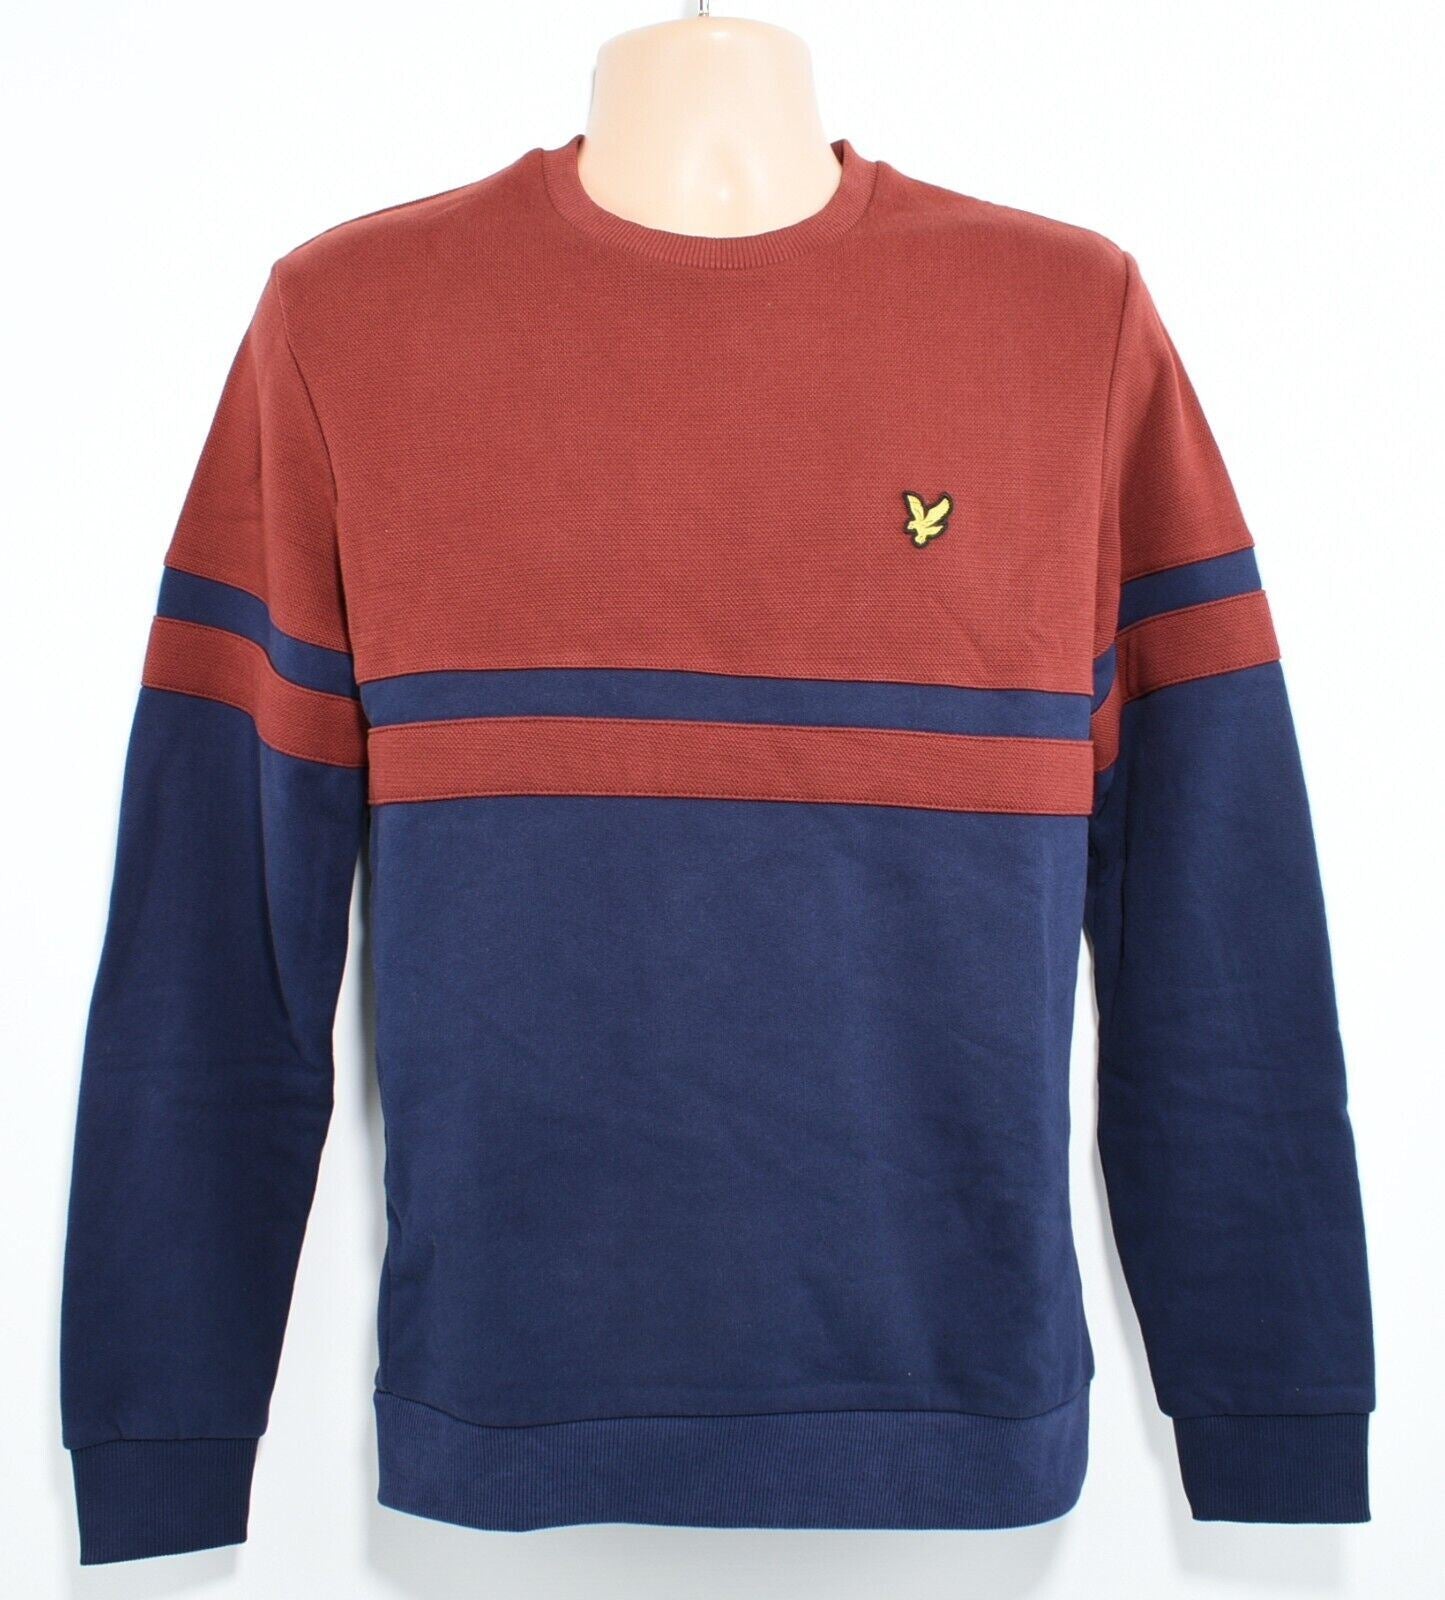 LYLE & SCOTT Mens Colourblock Sweatshirt, Rust Brown/Navy Blue, size SMALL